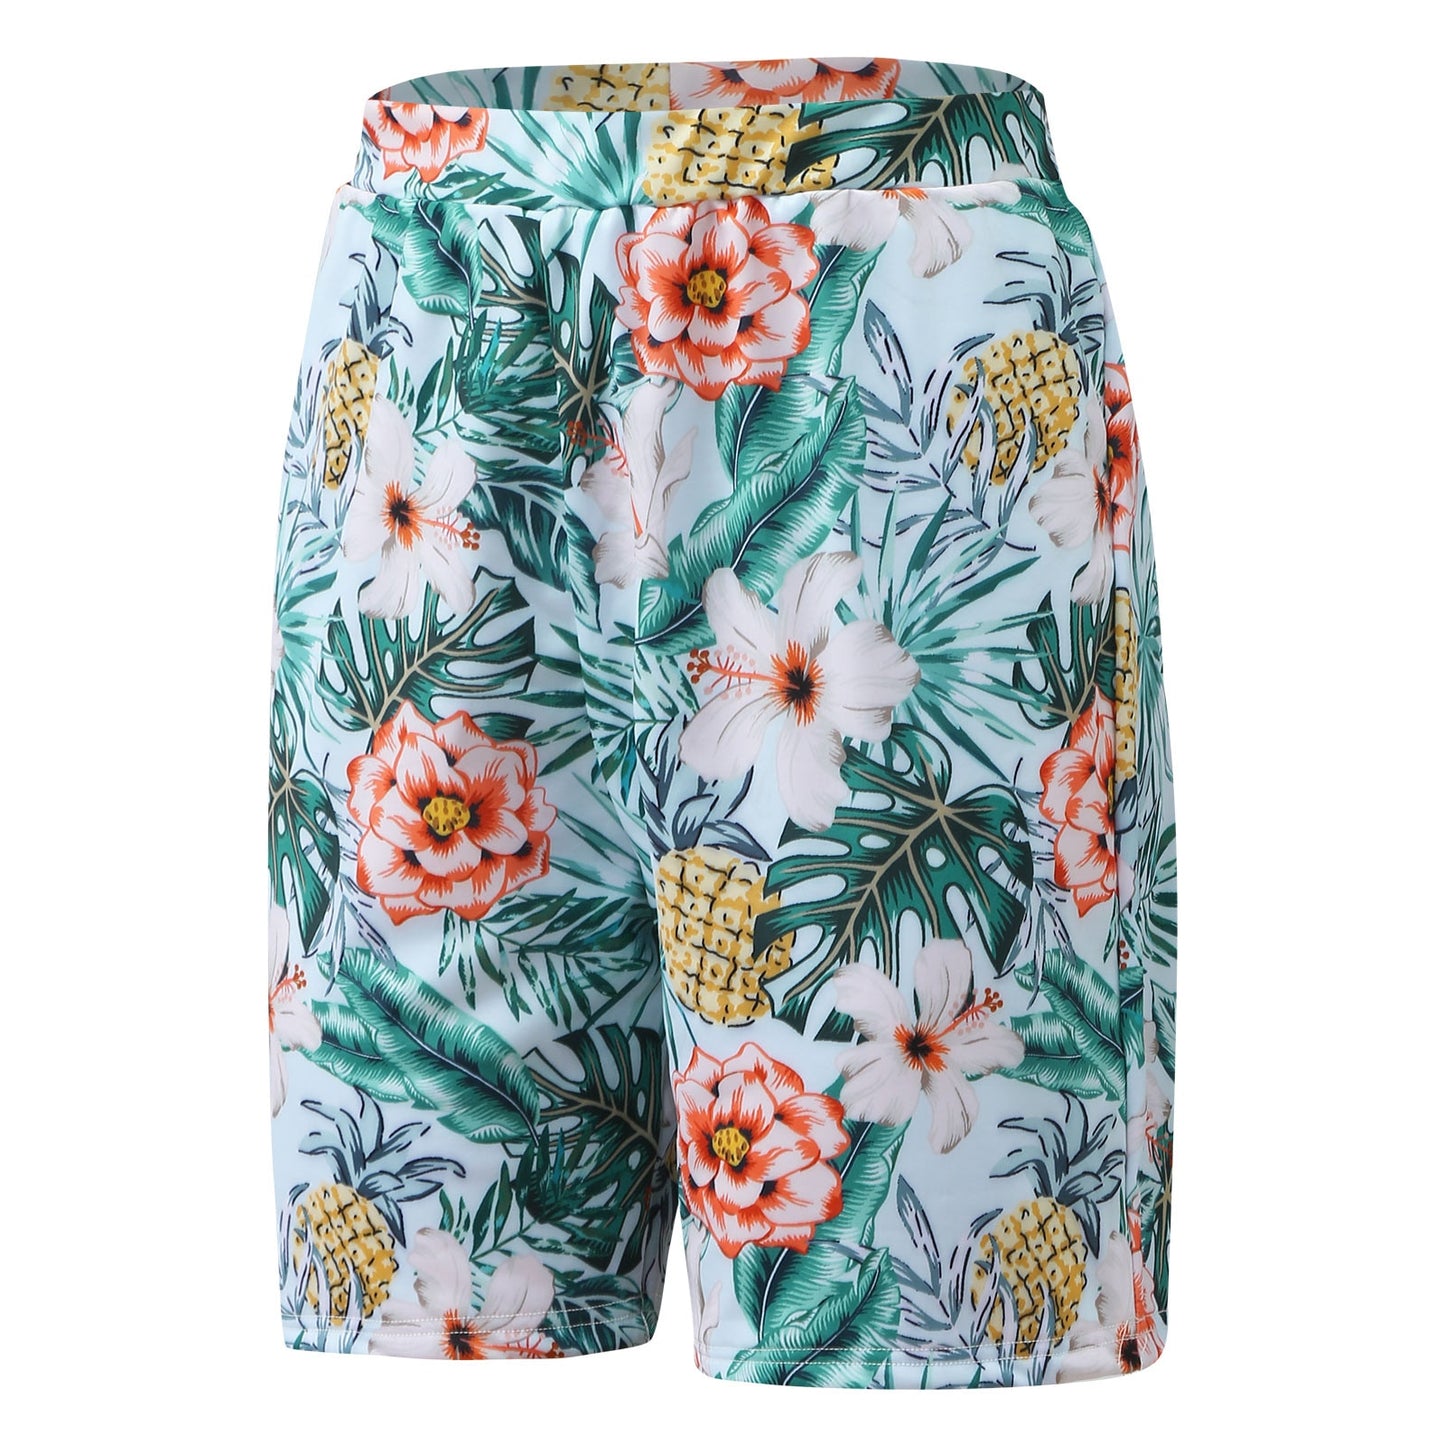 "Tropic Like It's Hot" Floral Leaf Matching Family Swimwear